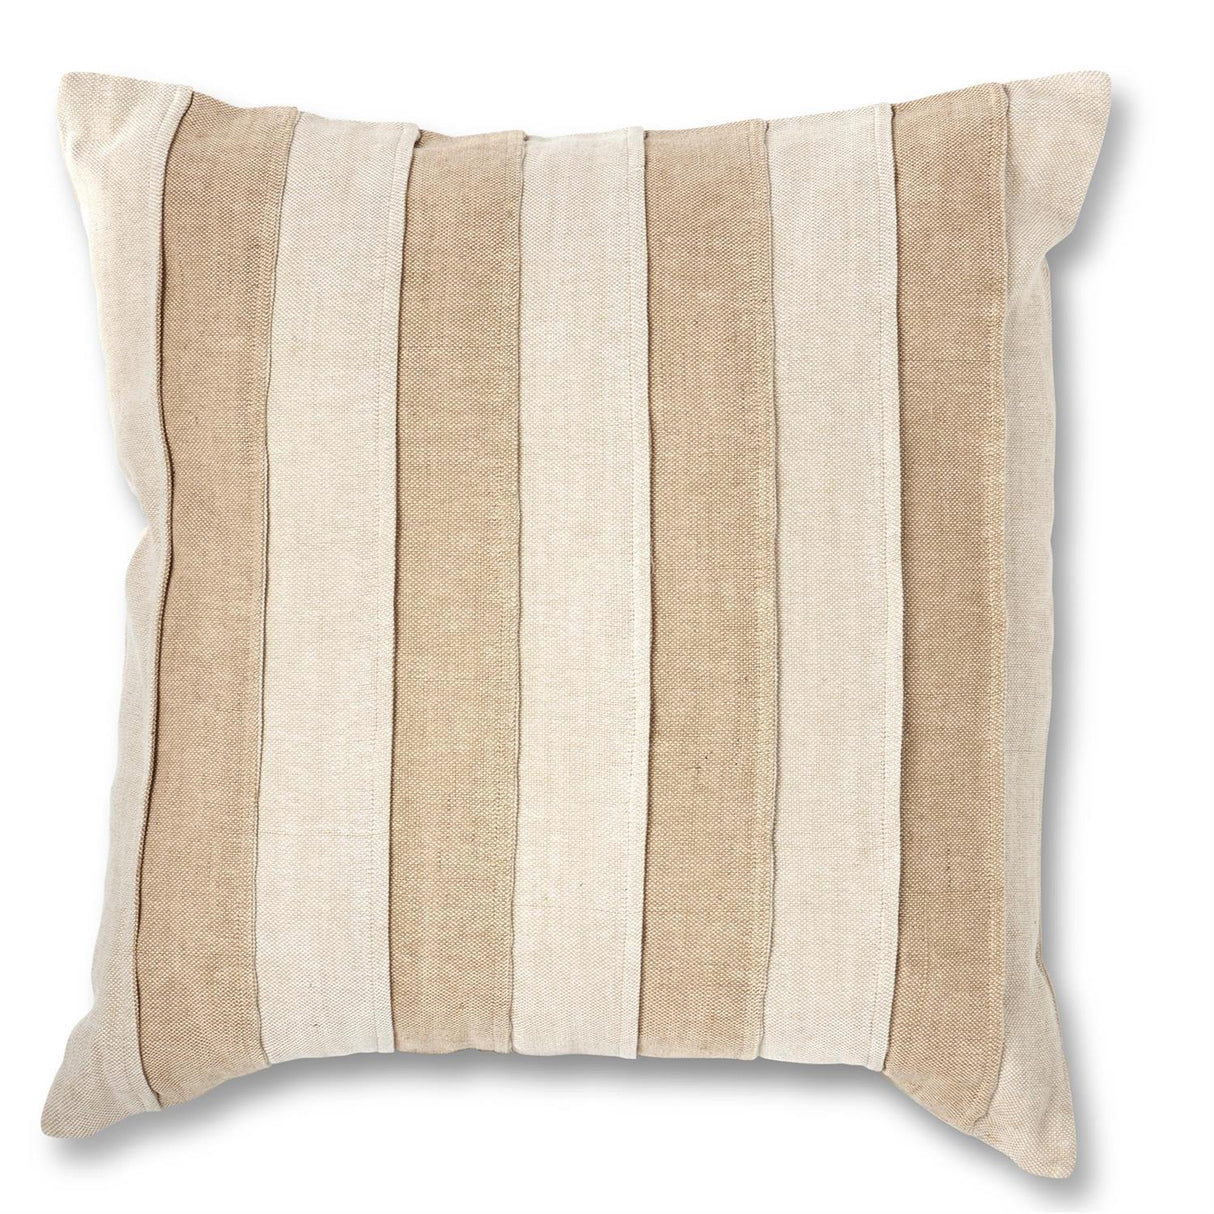 Square Natural Tan Striped Pillow